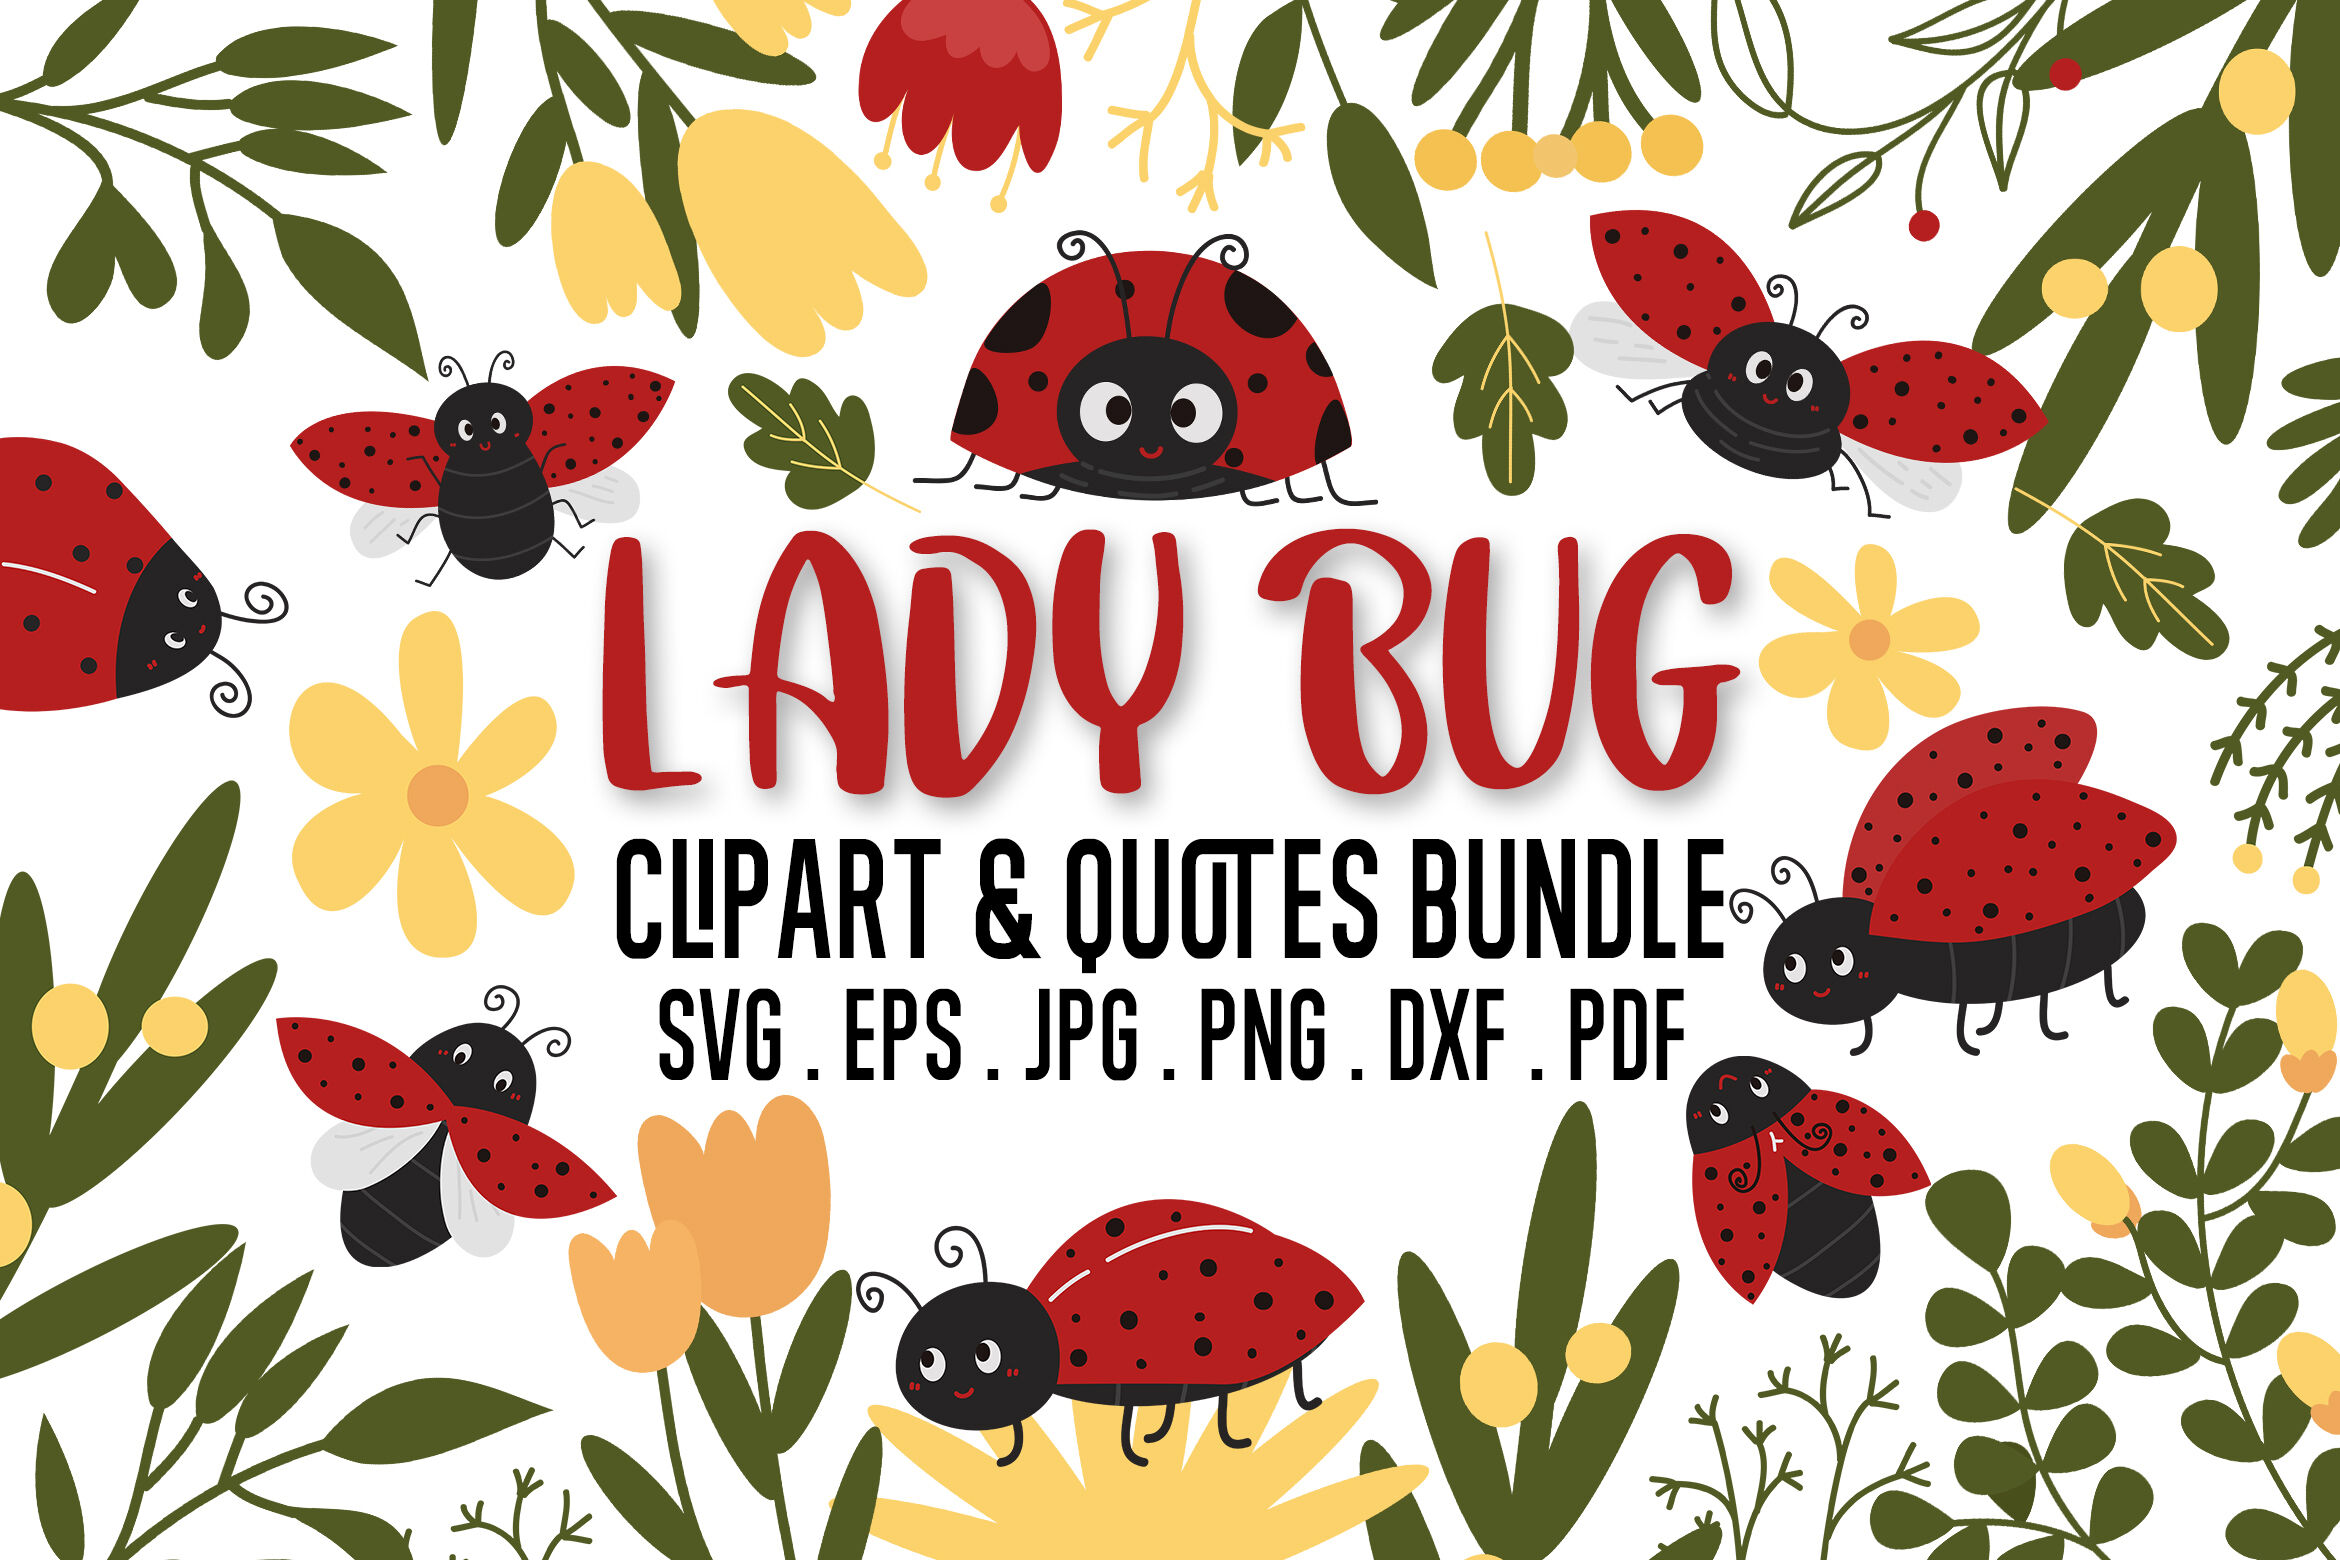 Ladybug clipart, cute ladybug png, bug clipart, love bug clipart